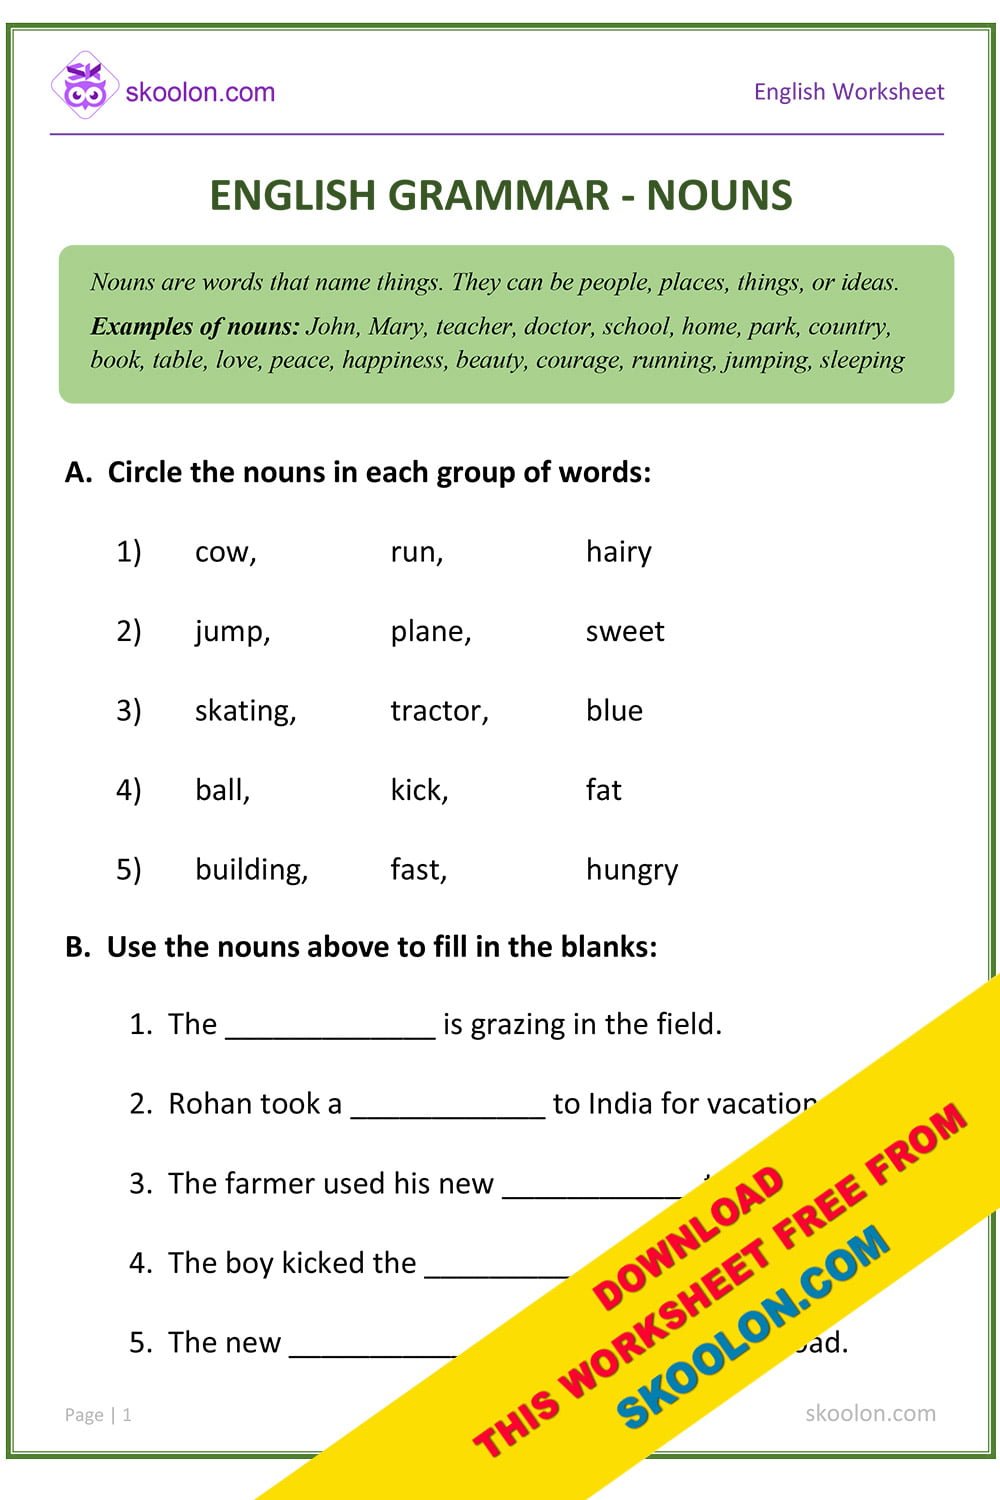 nouns-worksheet-6-skoolon